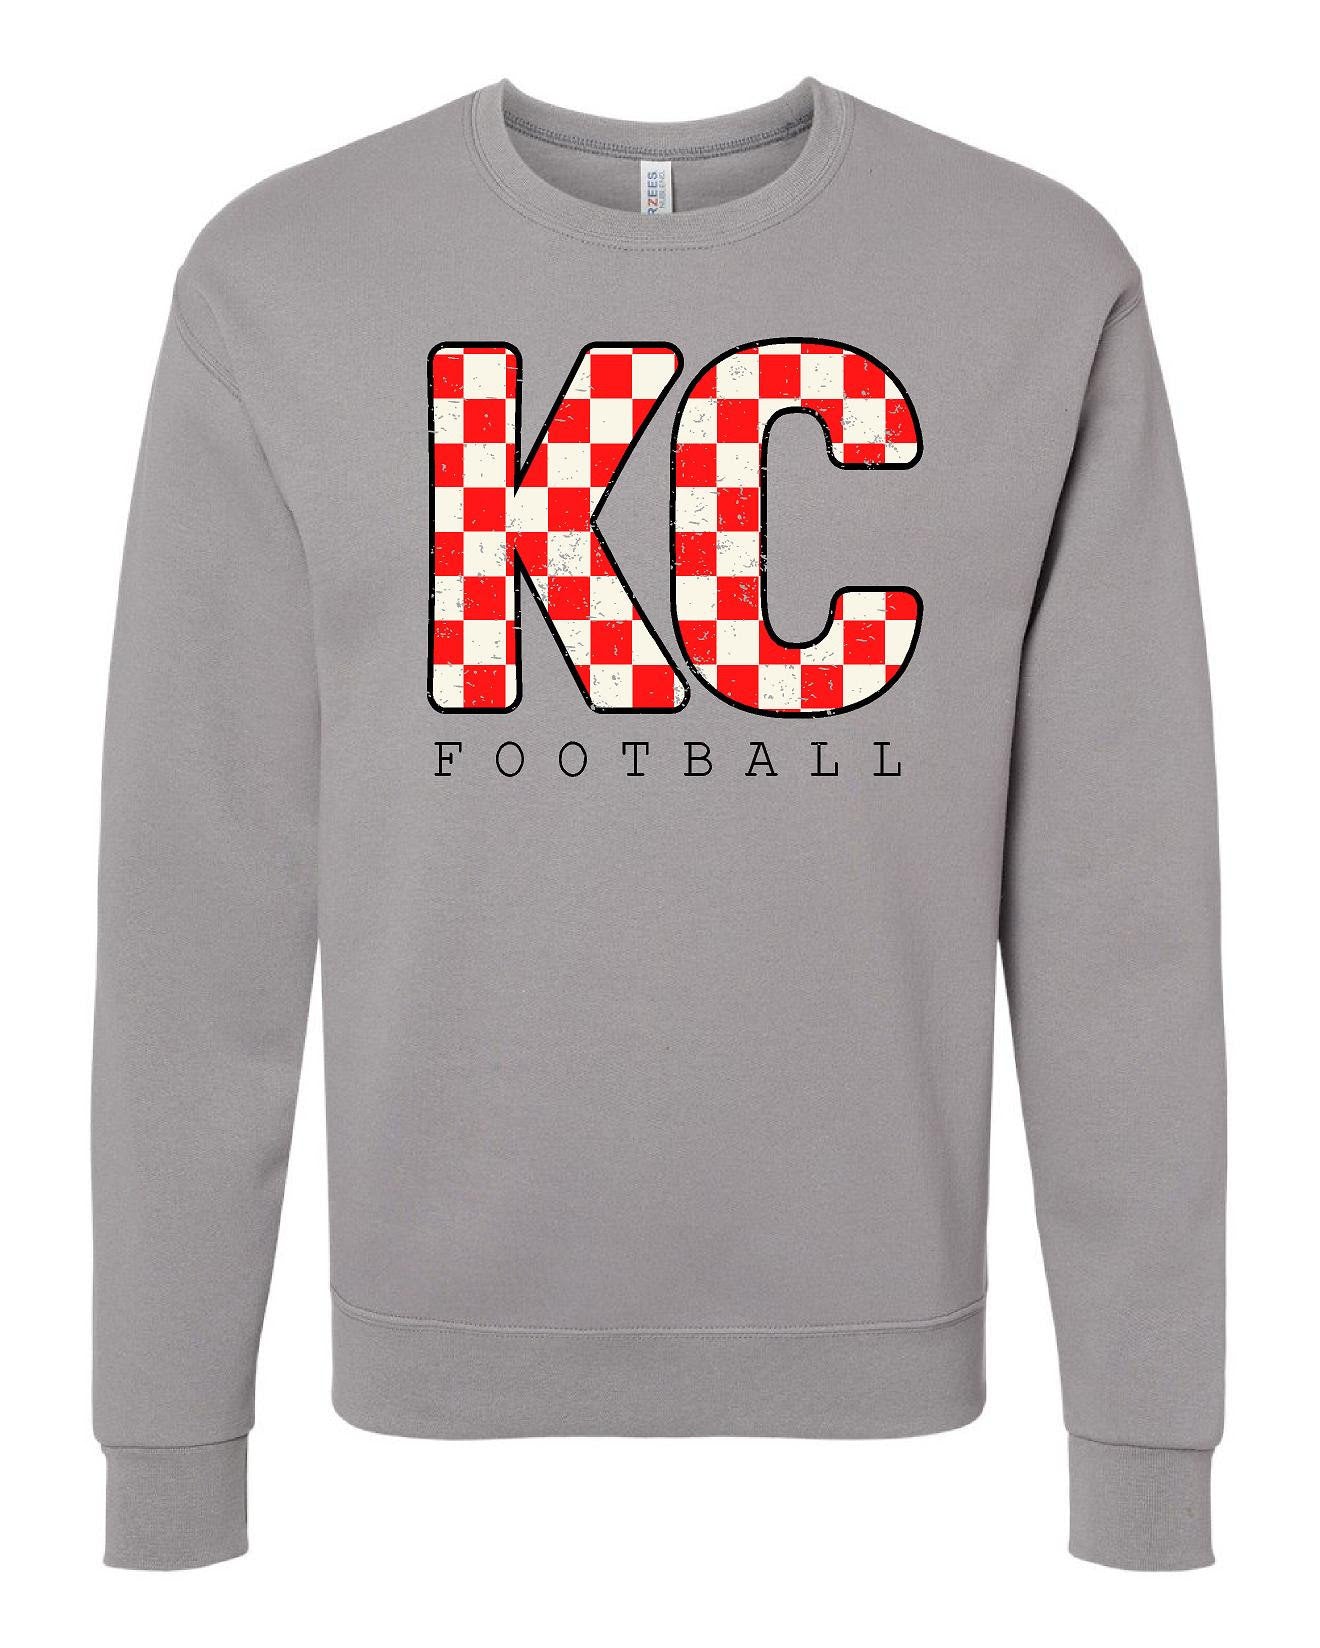 Vintage Checkered KC Football Sweatshirt